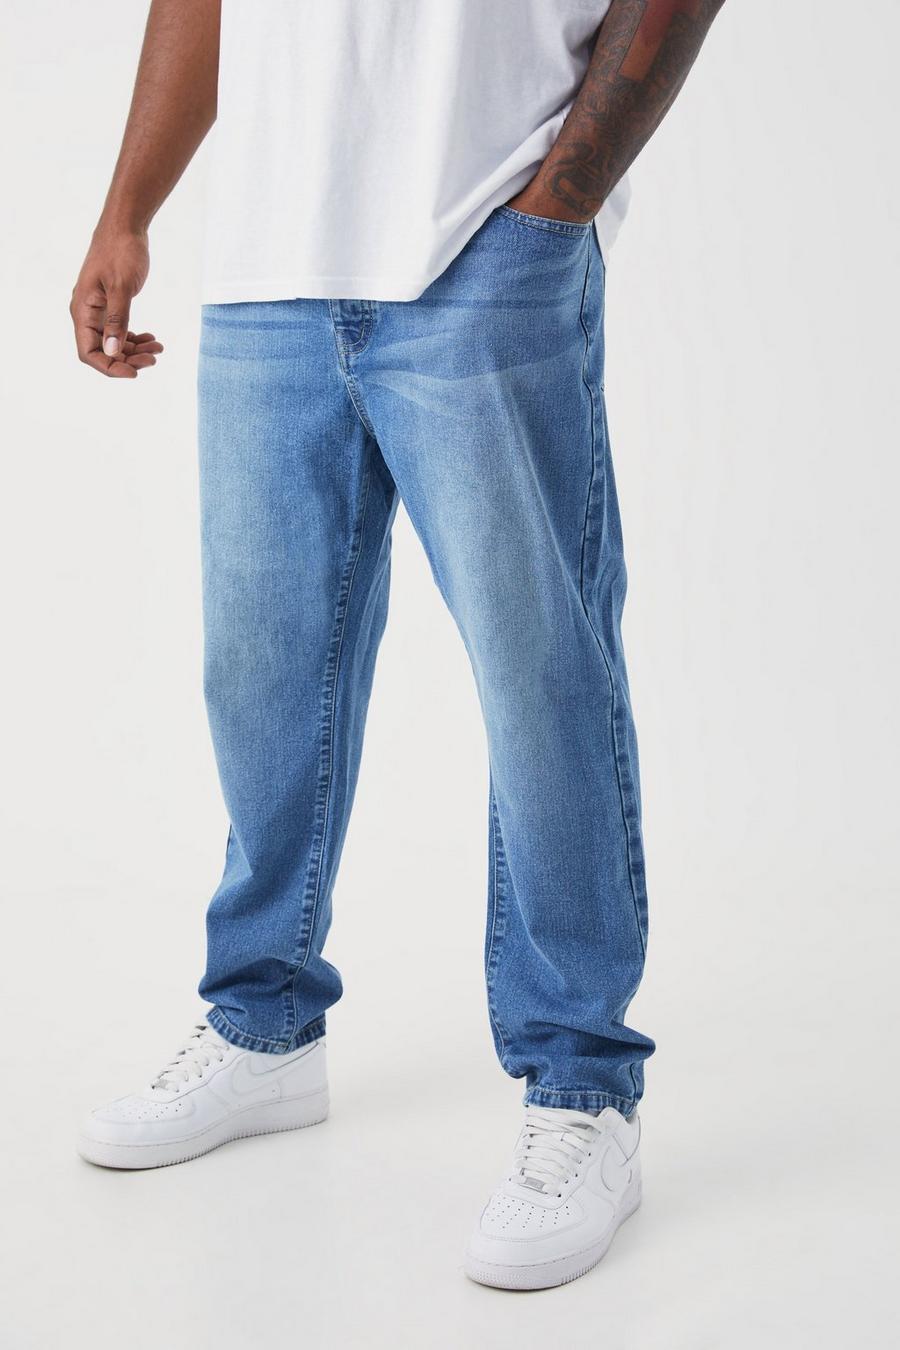 Jeans Plus Size Slim Fit in denim rigido, Mid blue azul